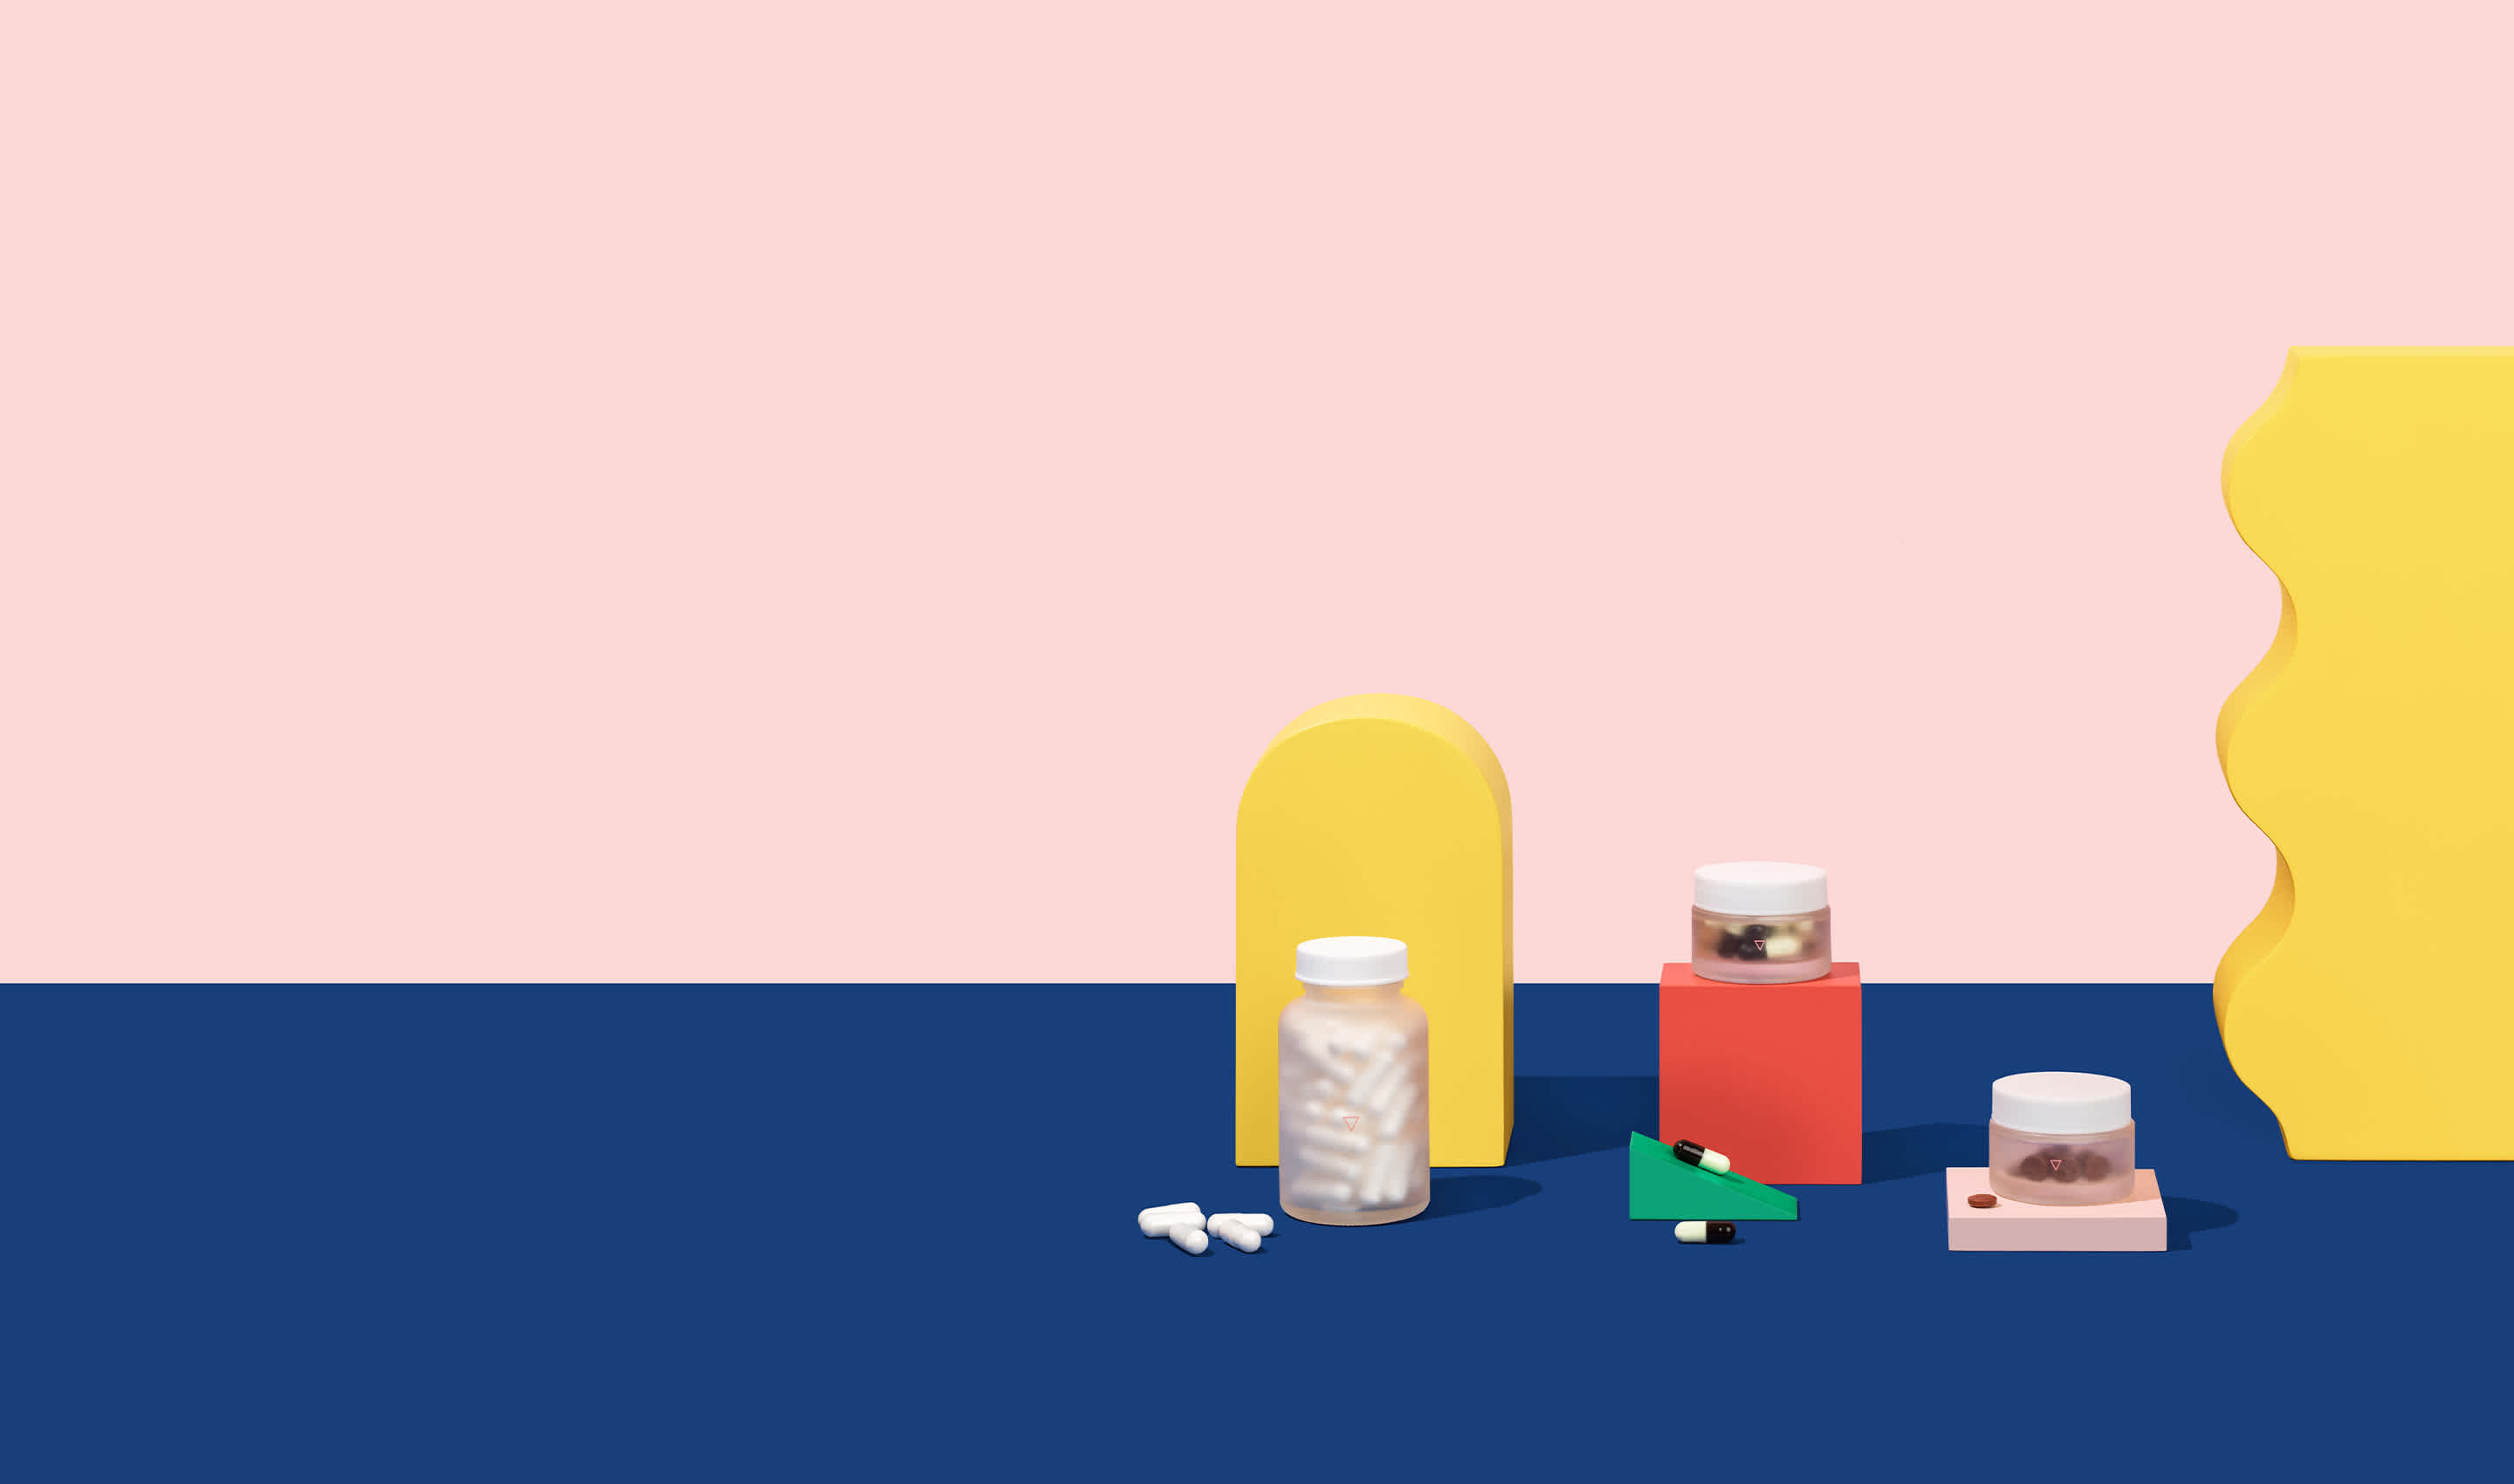 Pill bottles balanced on geometric shapes.